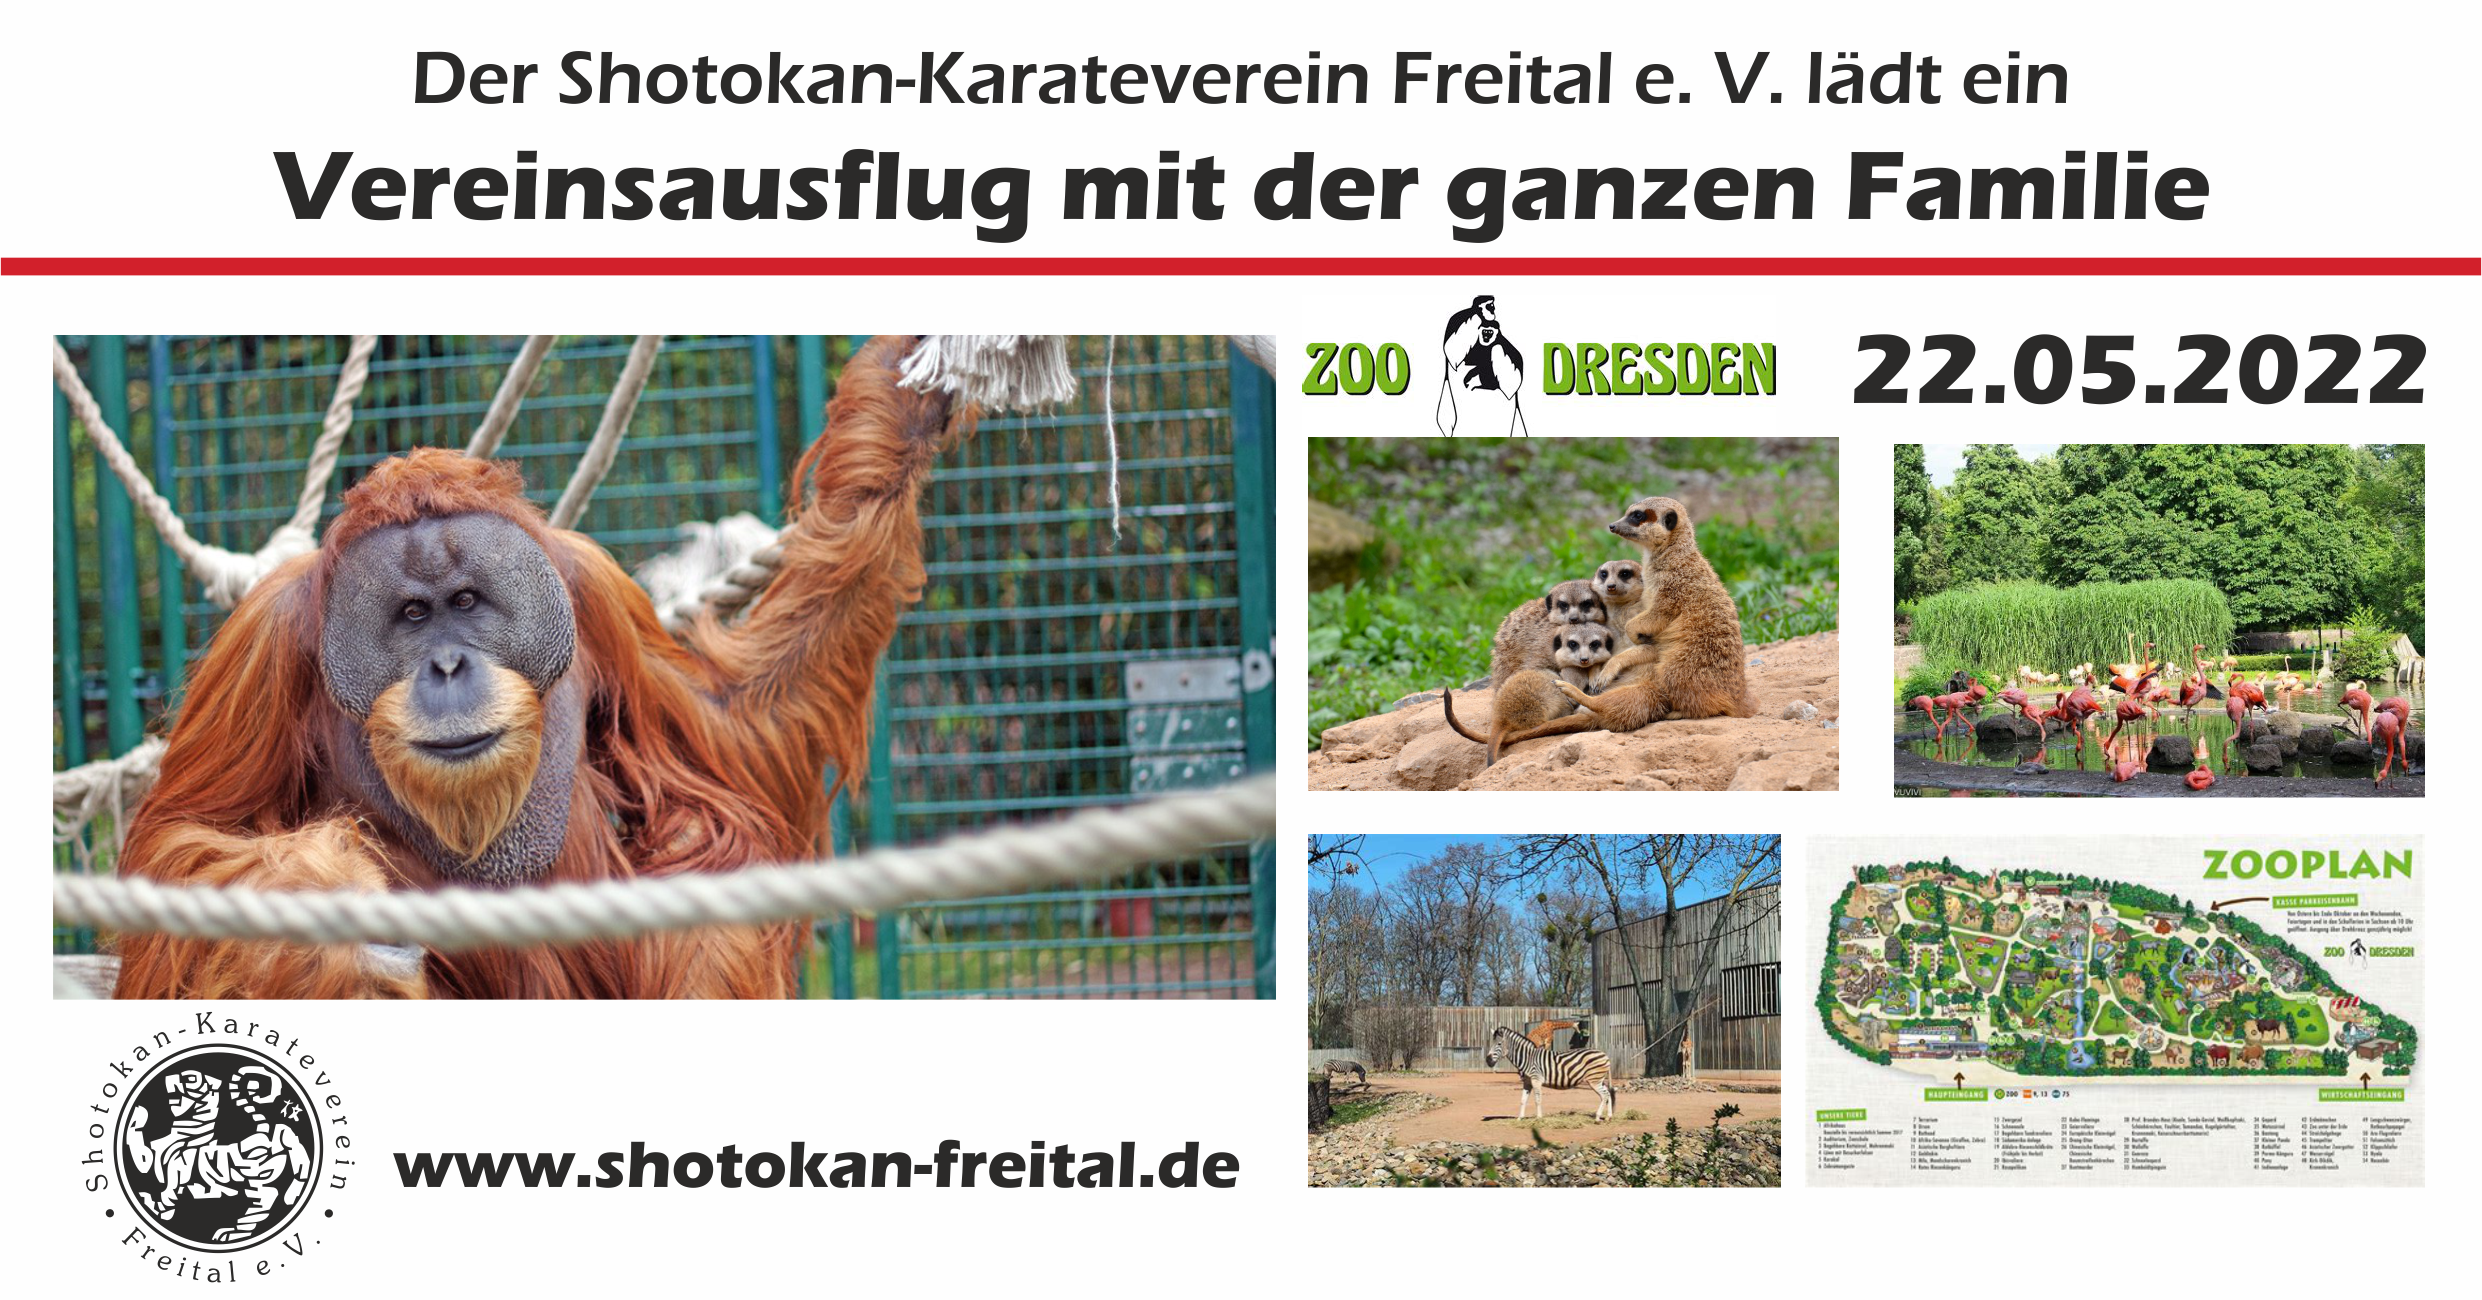 Vereinsausflug in den Dresdner Zoo